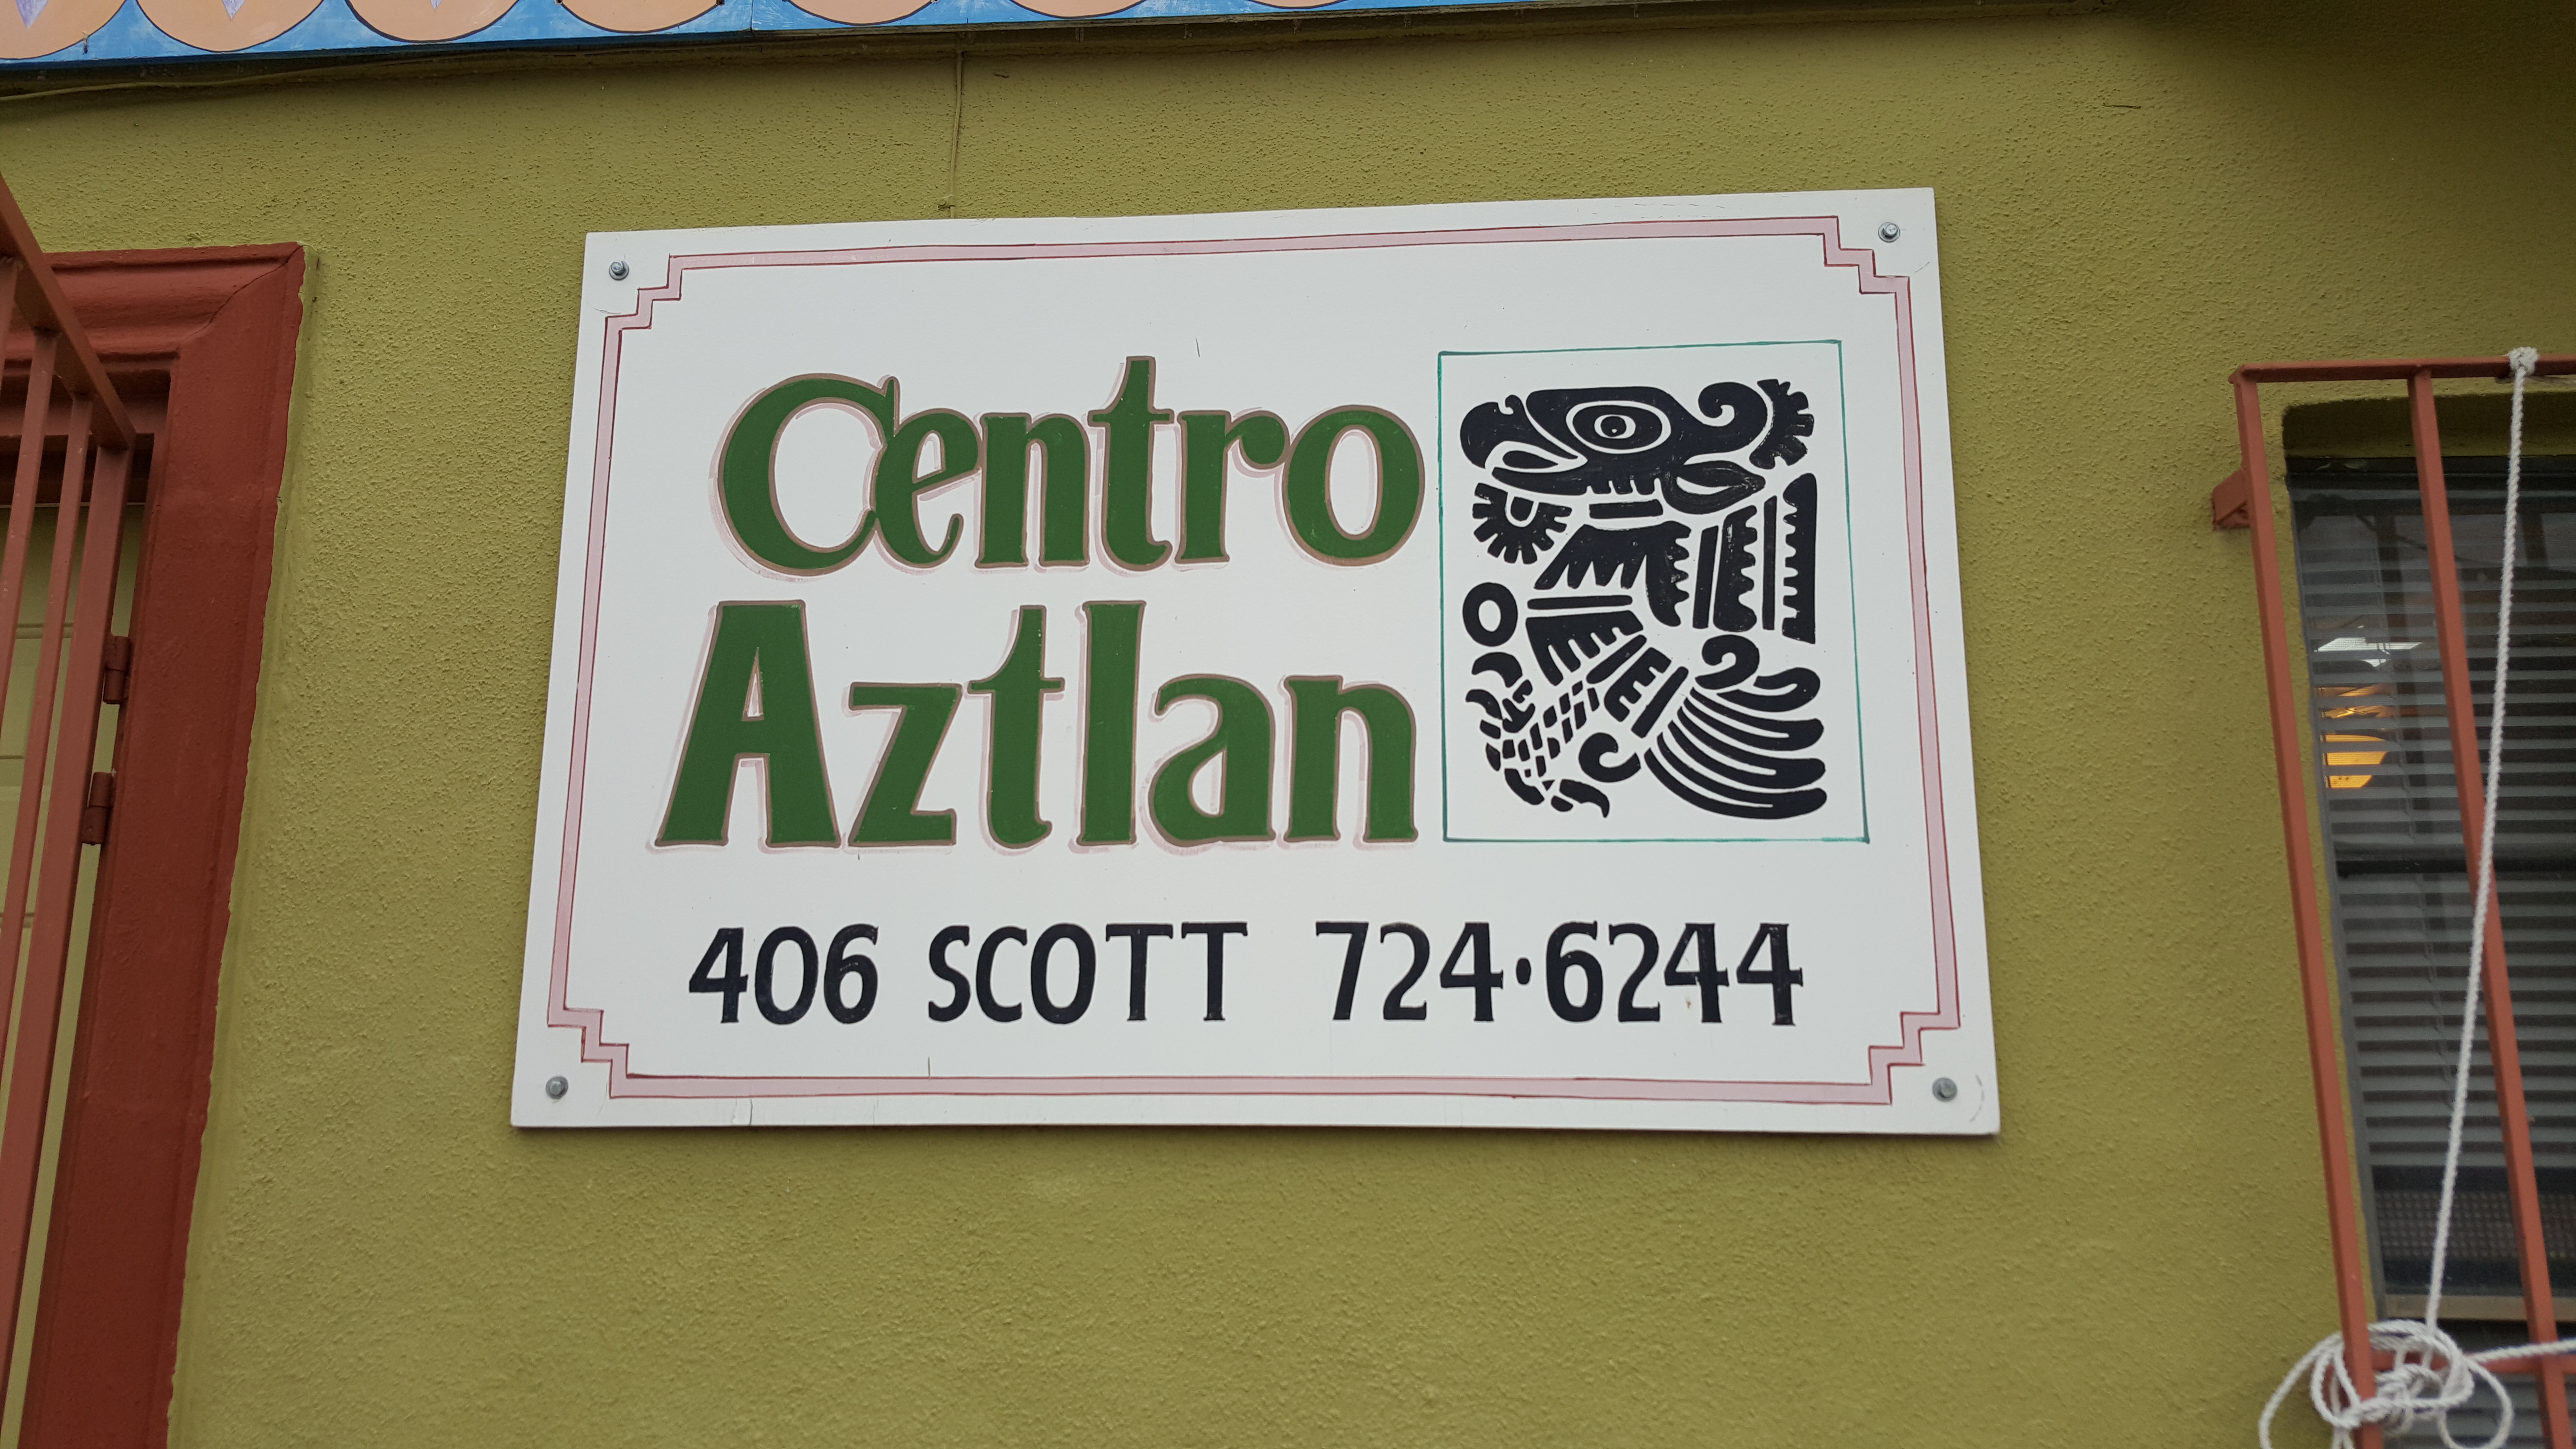 Centro Aztlan Provides Services For Local Immigrants